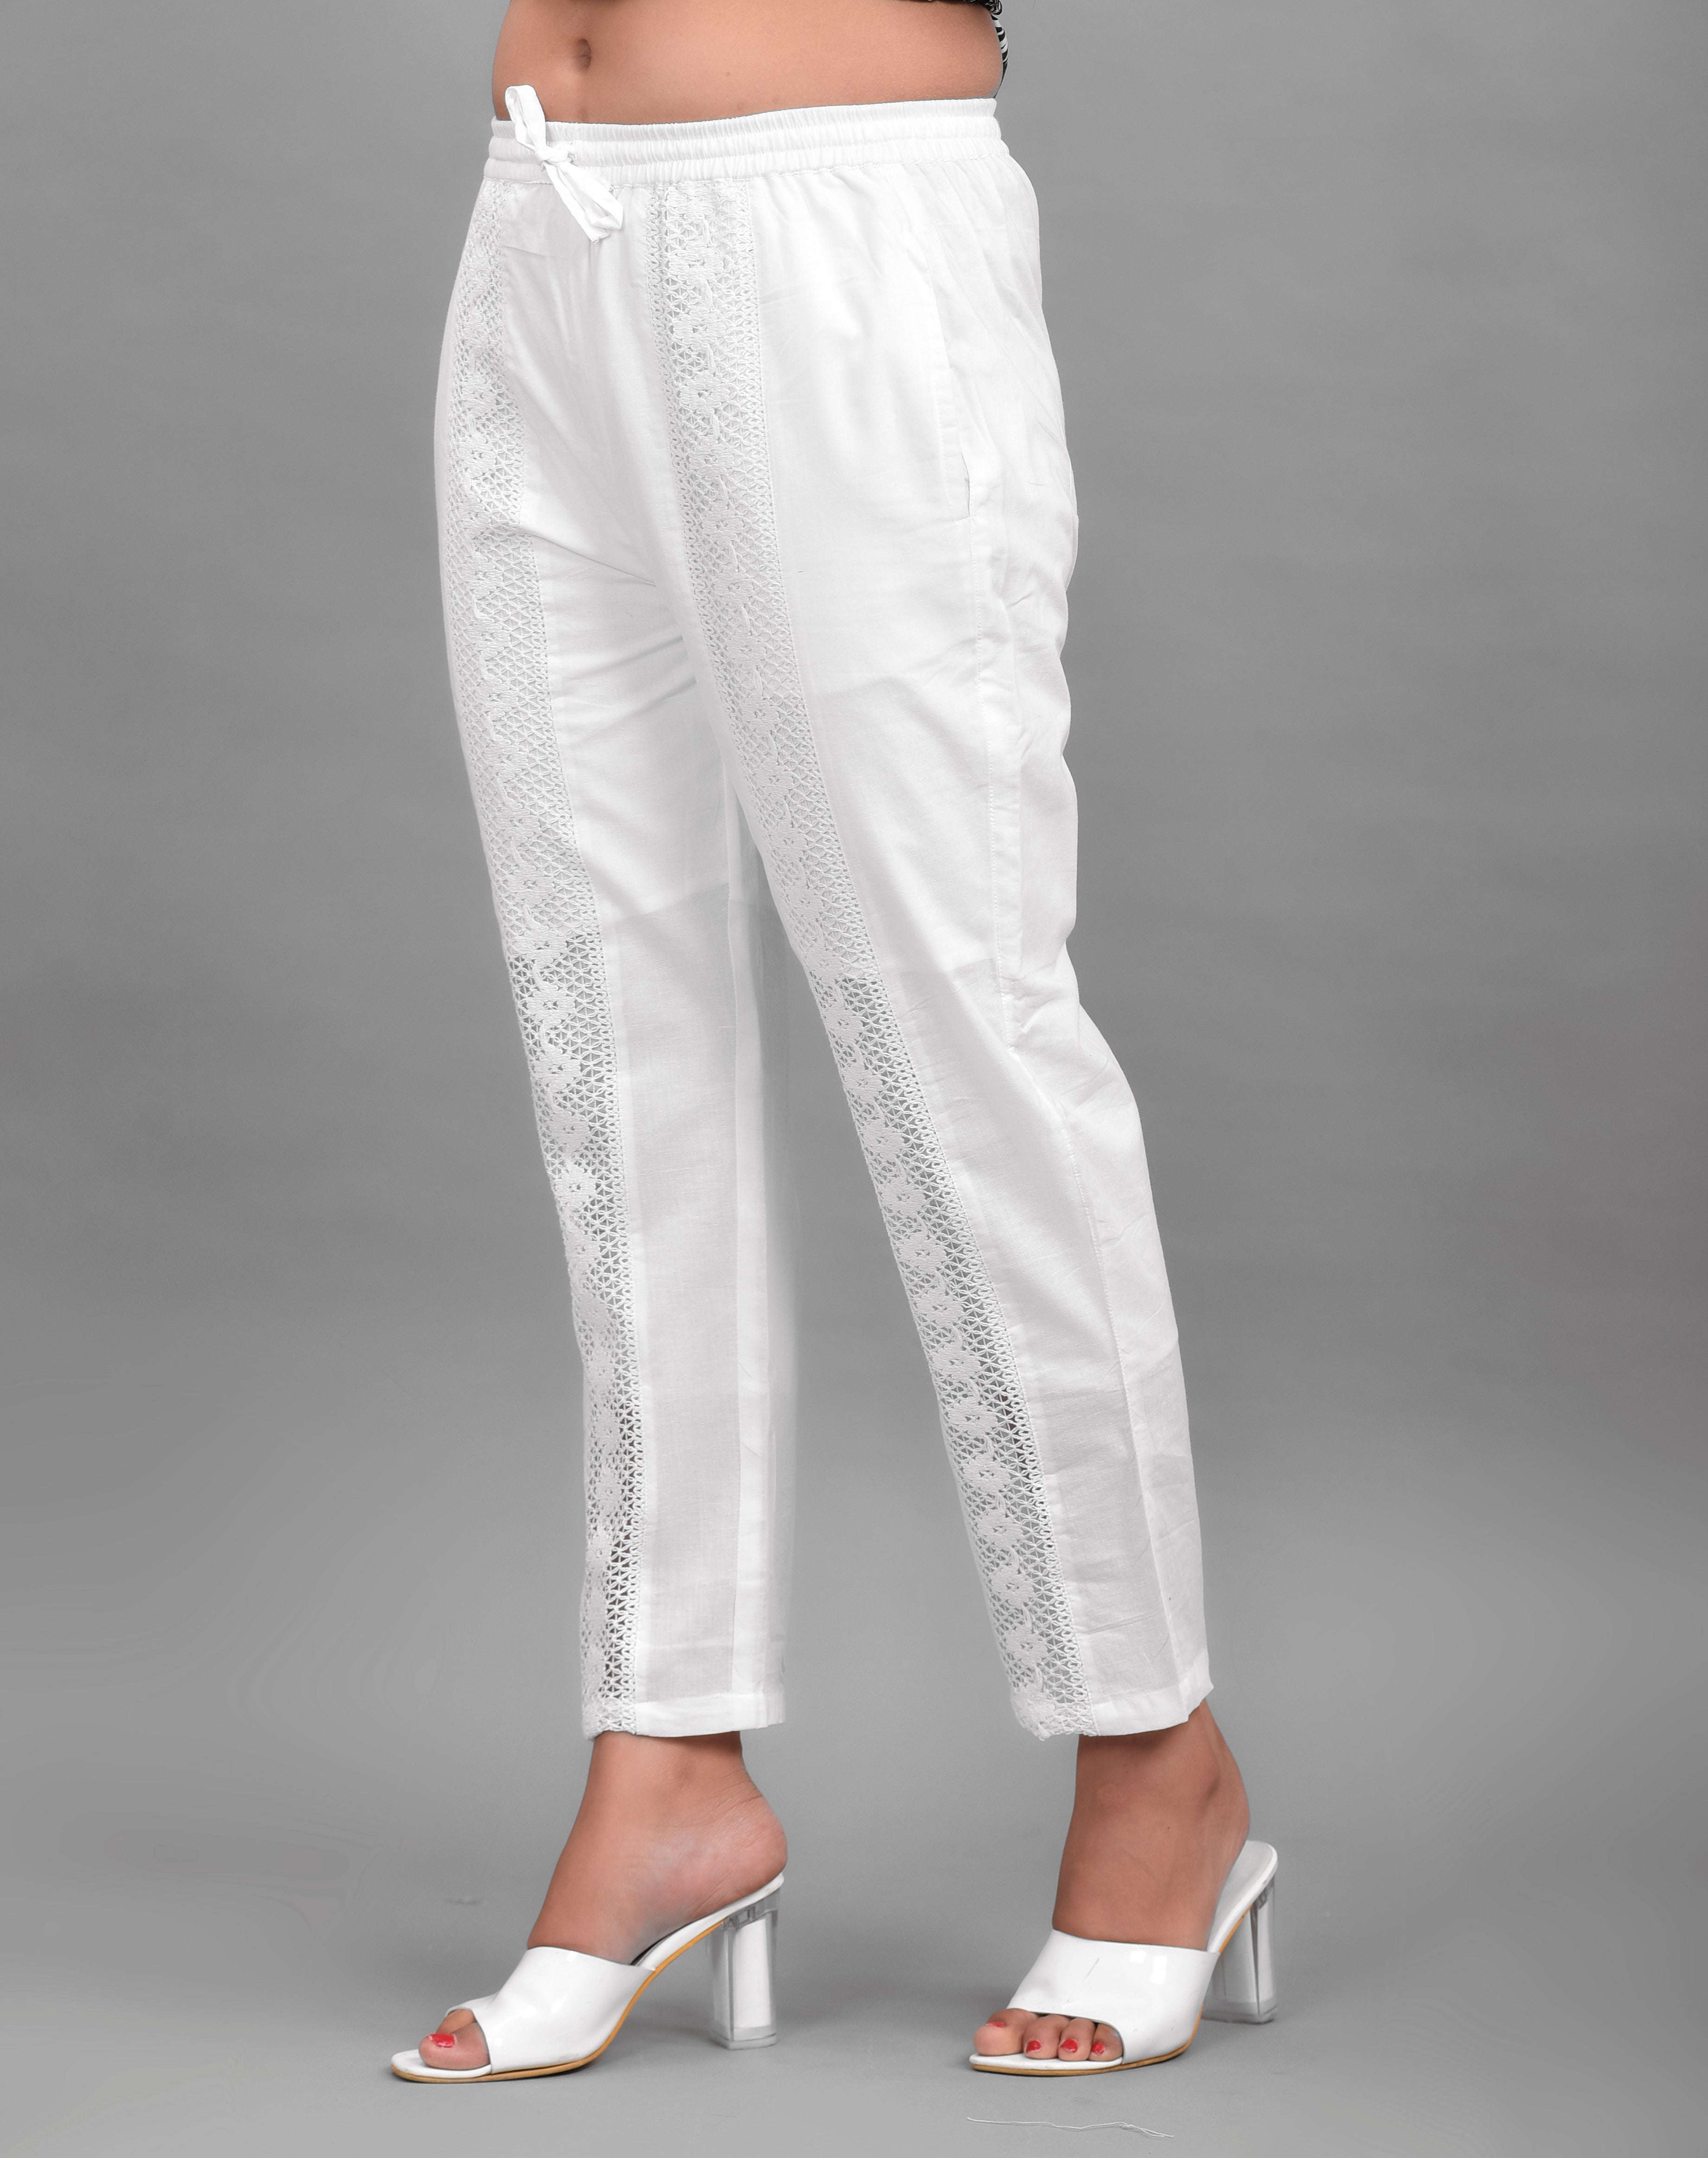 258 INR - Black Casual Lace Pant For Women - Cigarette pants - Straight Pant